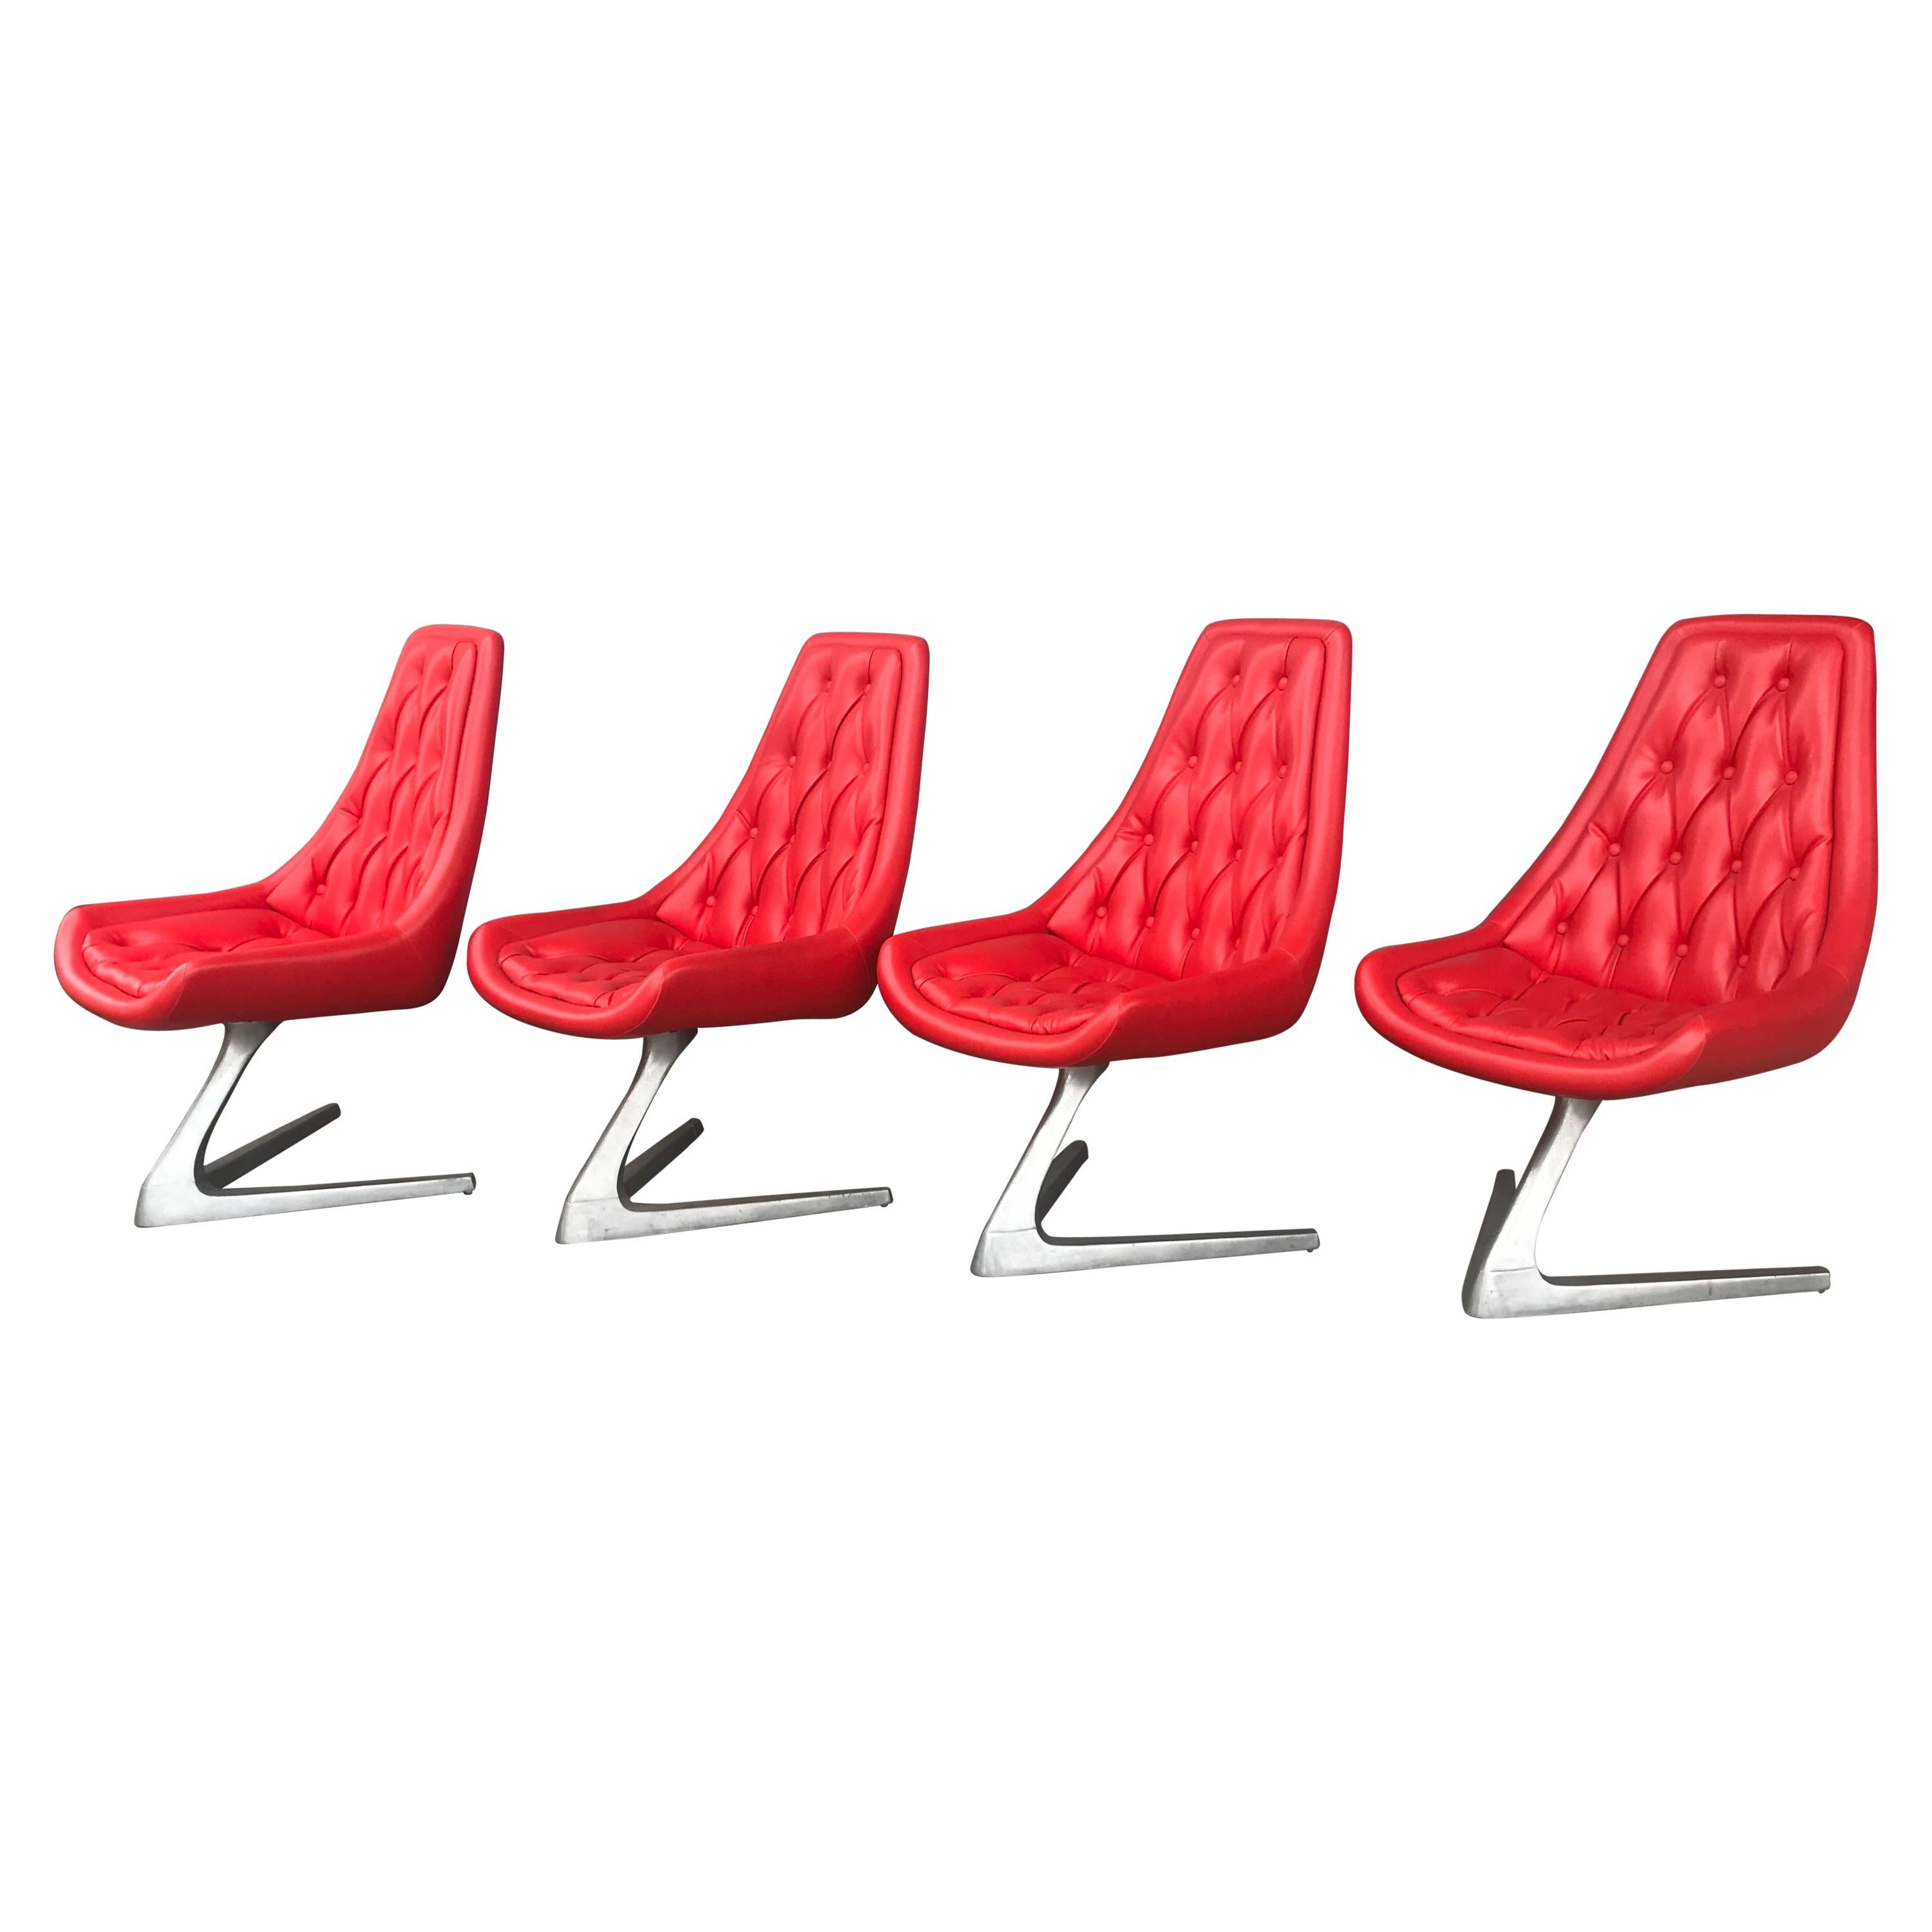 Set of 4 Chromcraft Sculpta Unicorn Chairs, Star Trek Chair Rare, Original Red